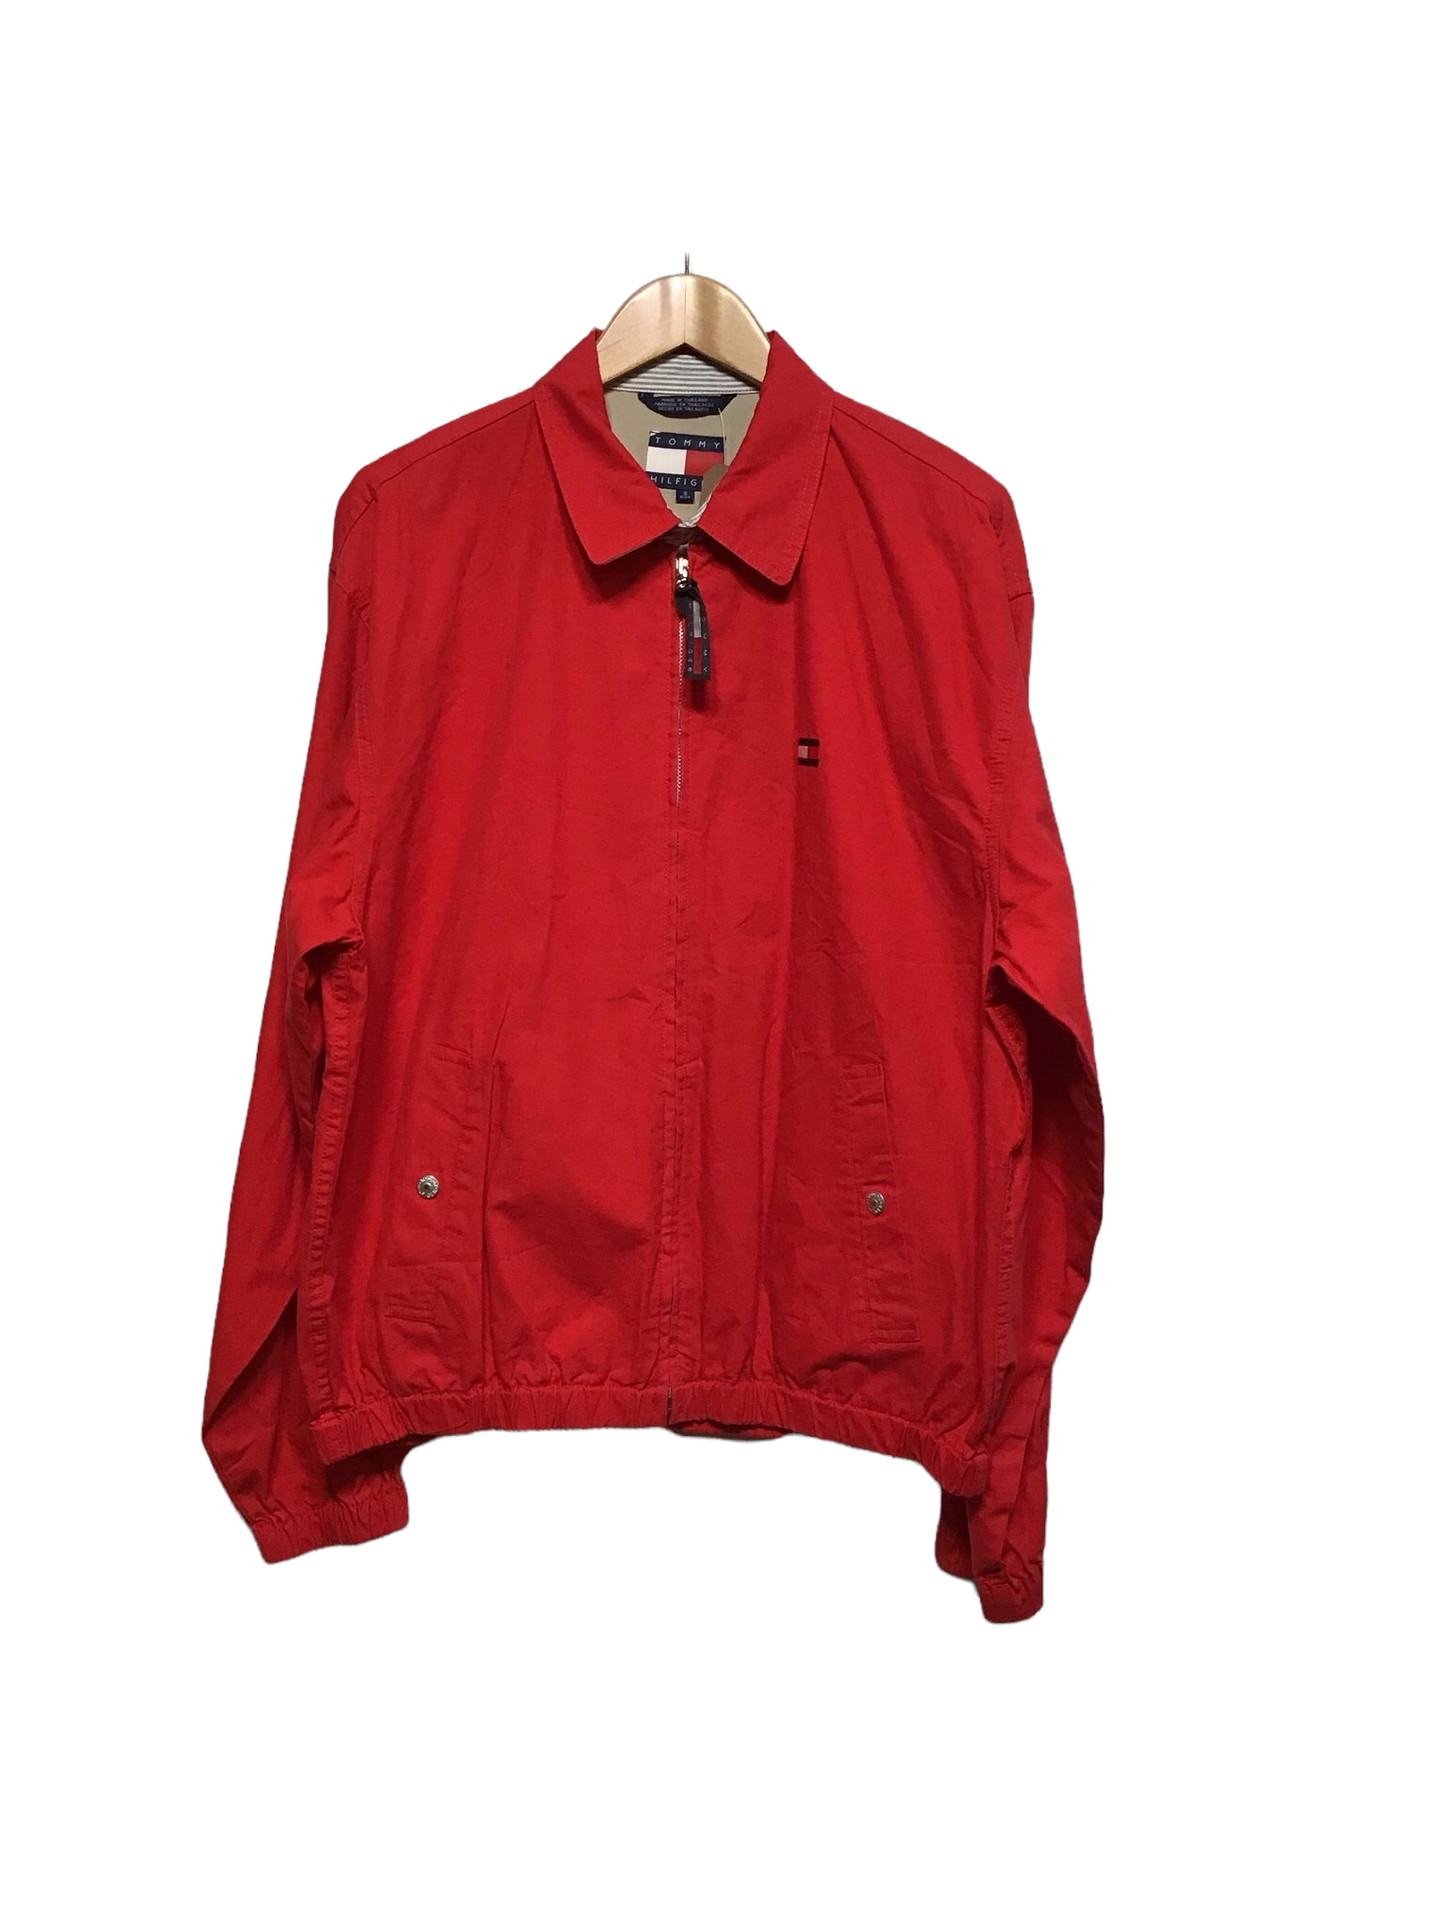 Tommy Hilfiger Red Jacket (Size S)